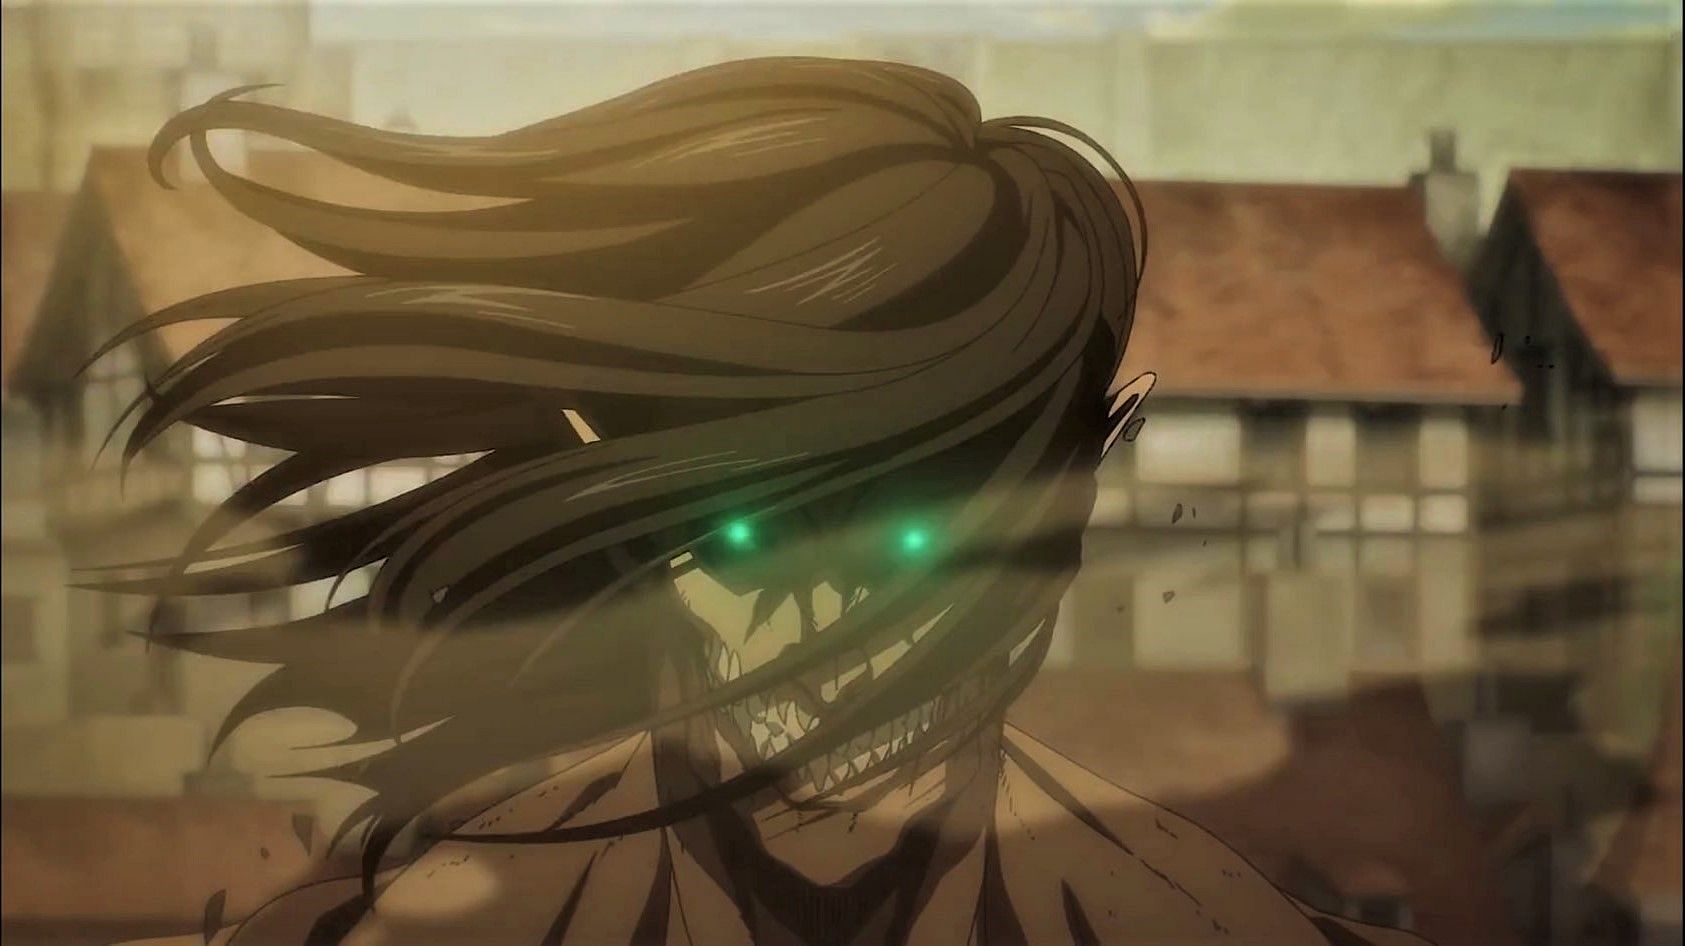 The Attack on Titan Final Season Part 2 trailer has raised lots of eyebrows (Image via Animehype)